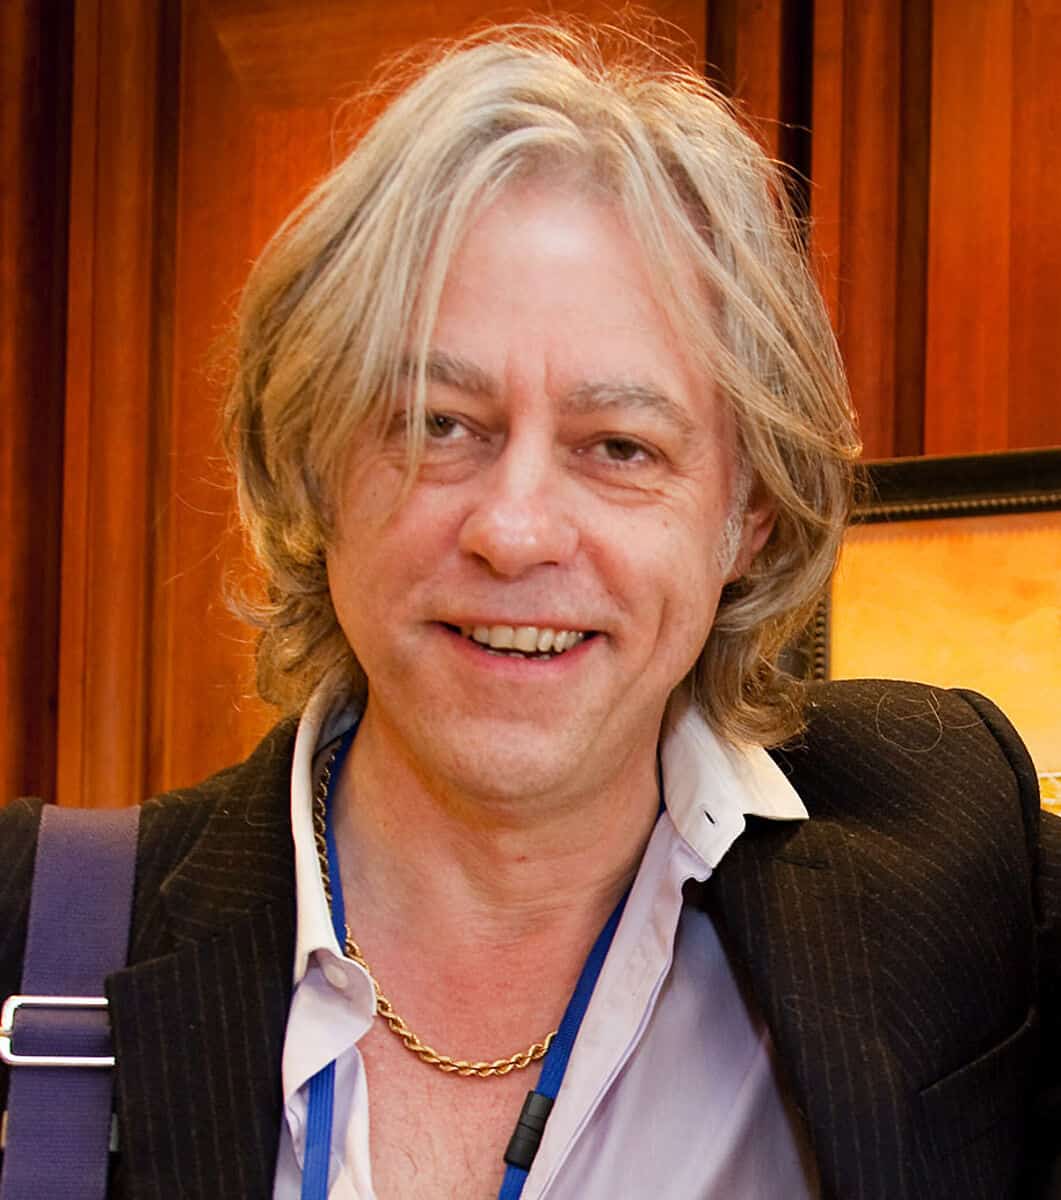 Bob Geldof - Famous Author